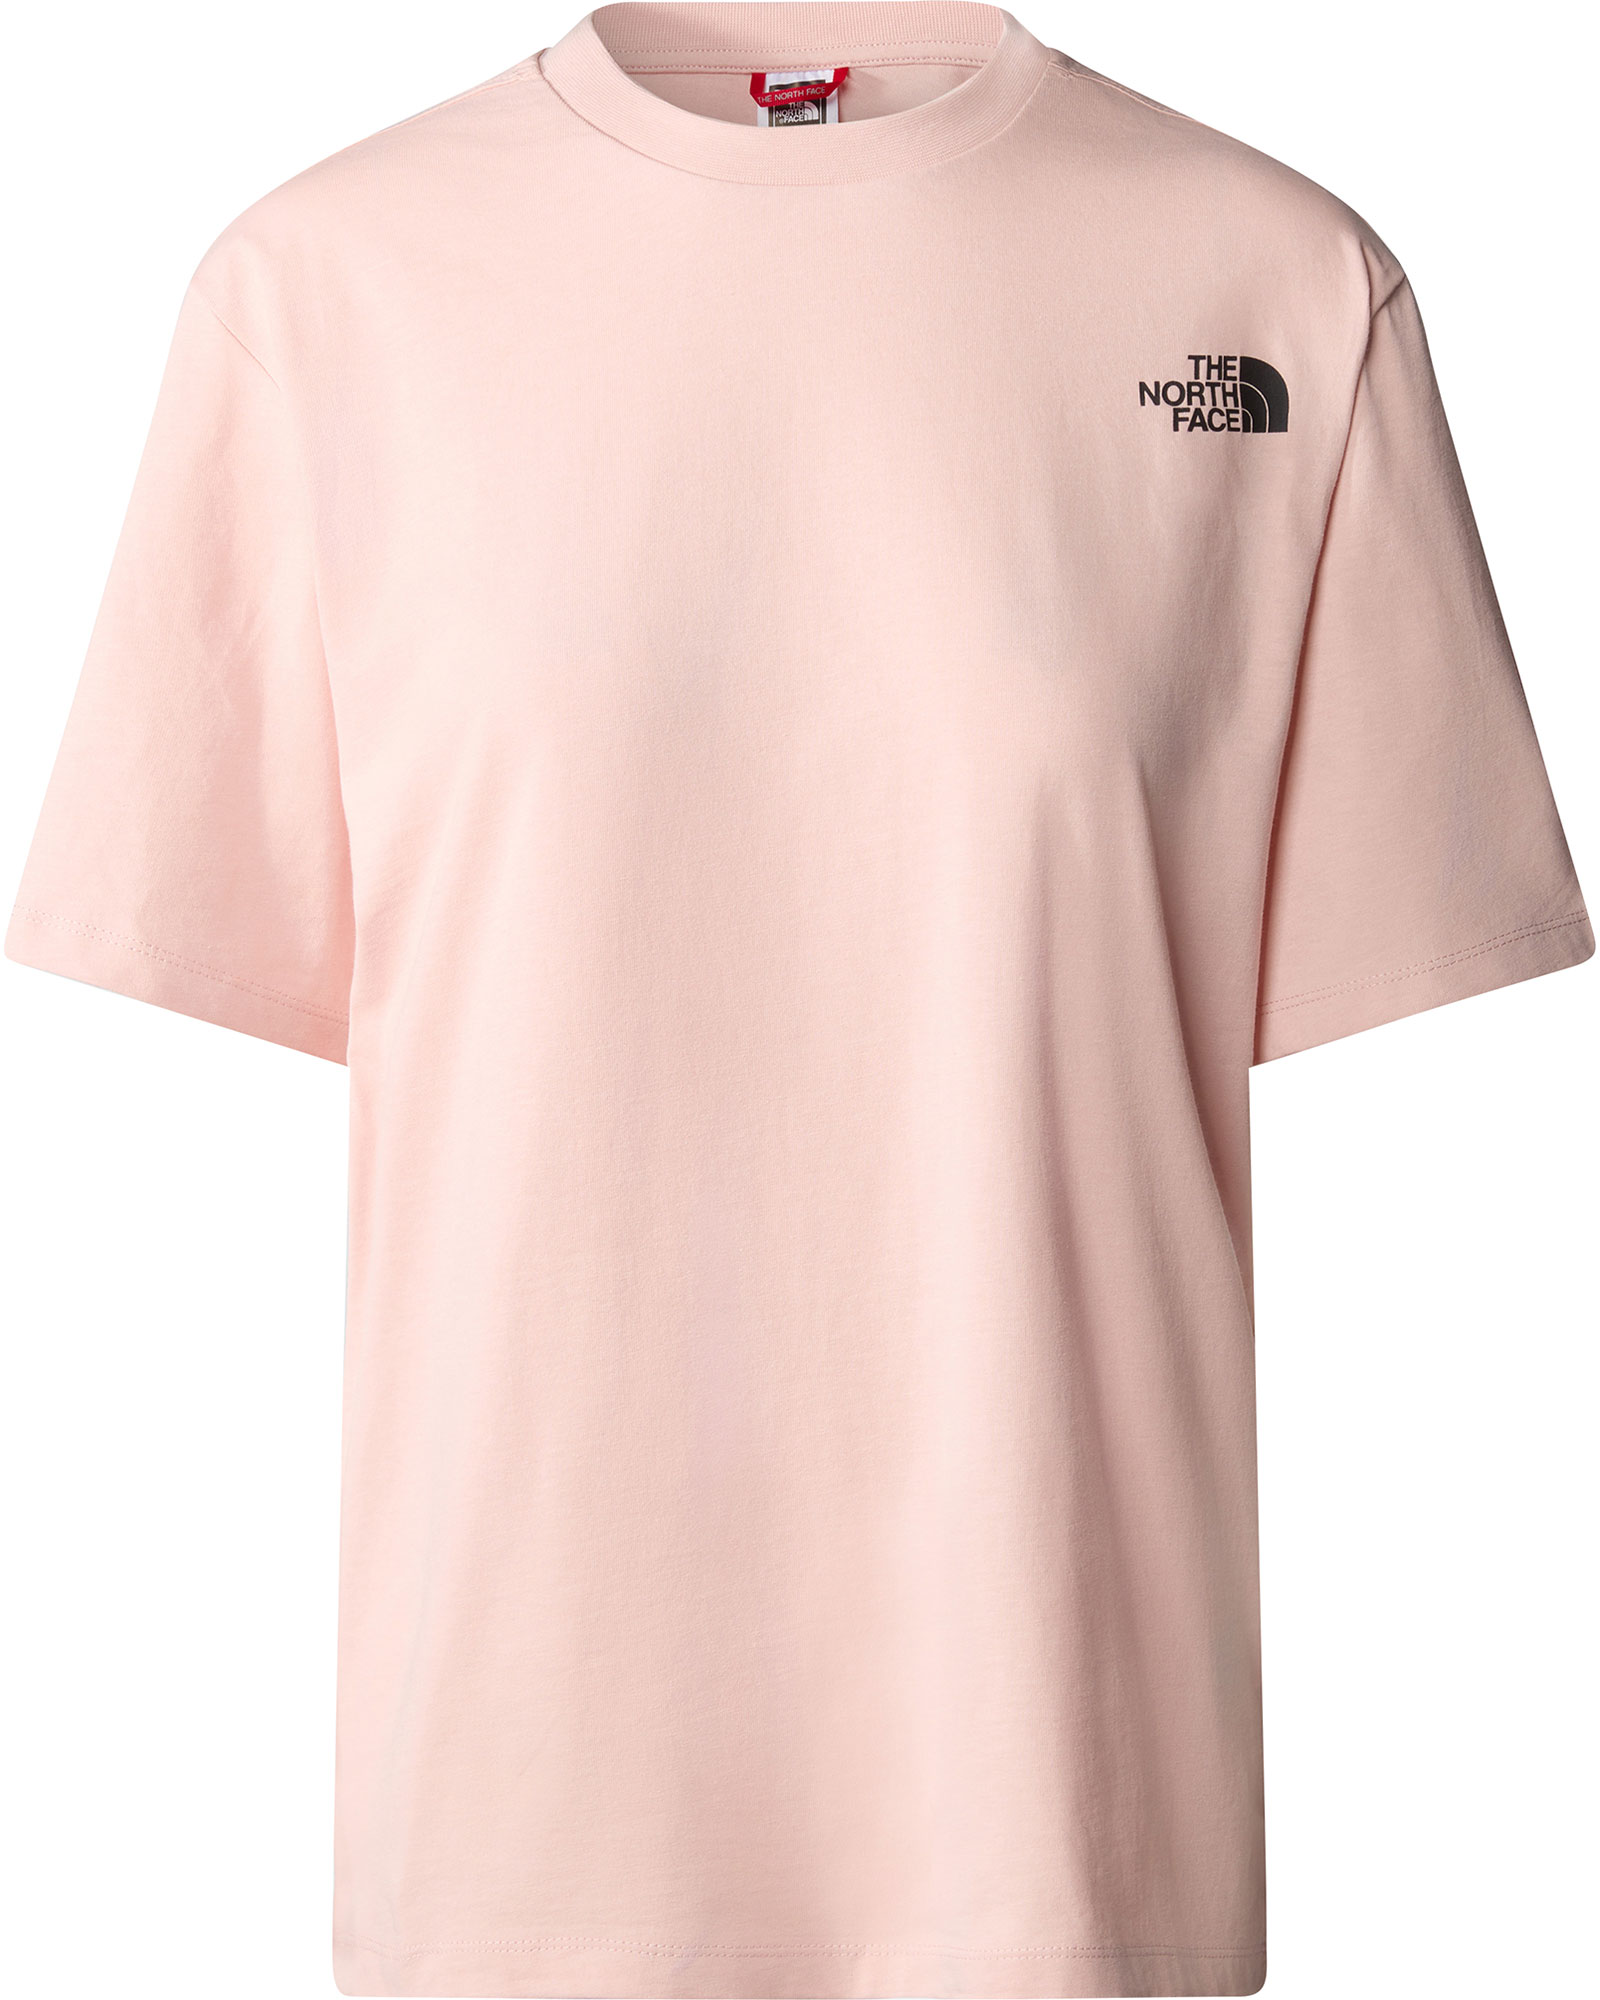 The North Face Relaxed Redbox Women’s T Shirt - Pink Moss M